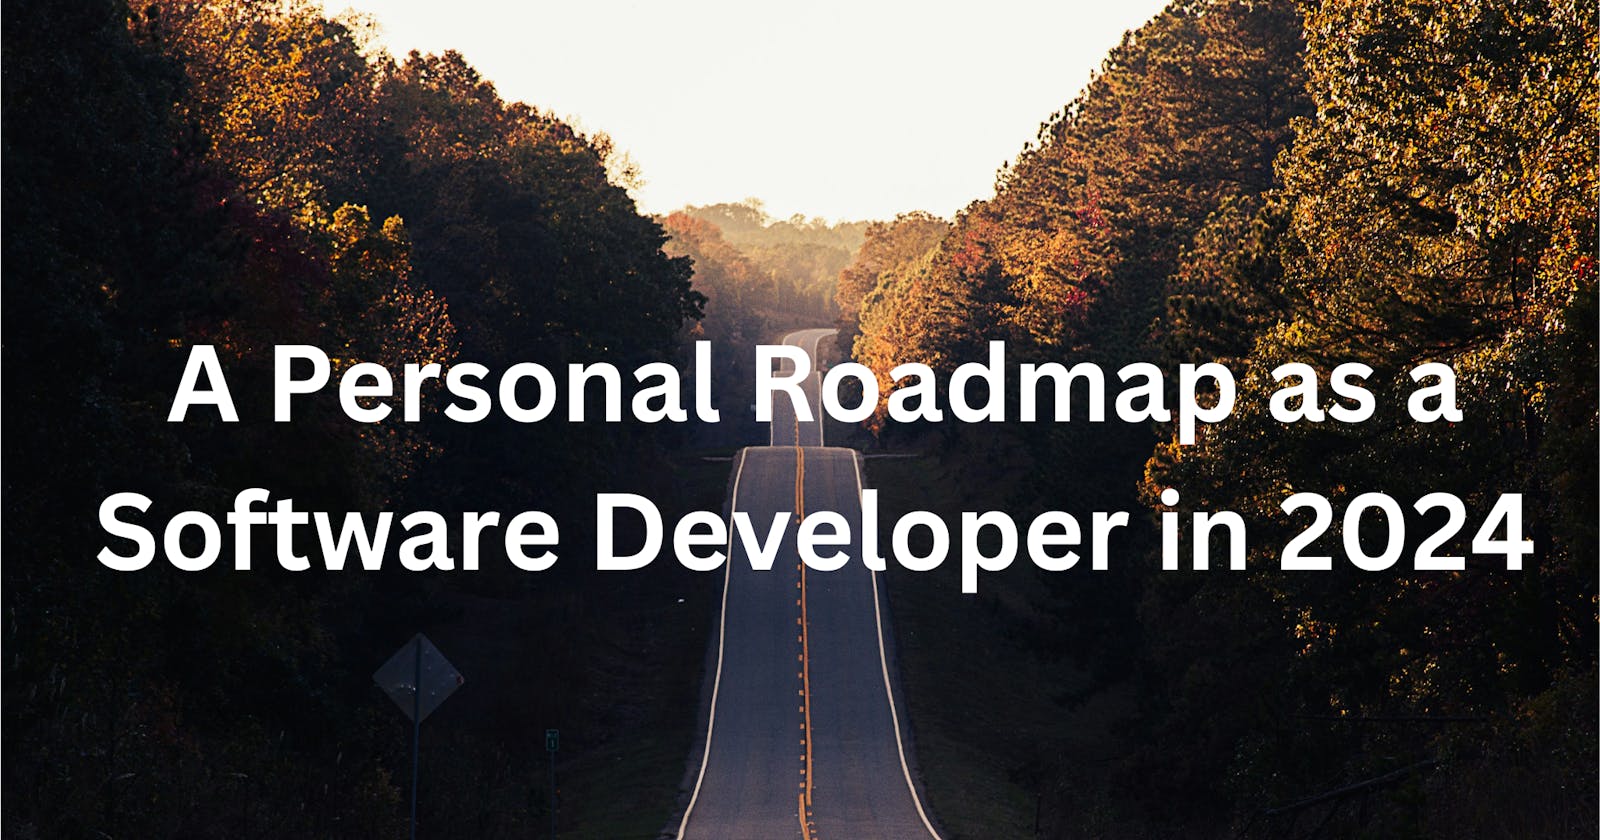 A Personal Roadmap as a Software Developer in 2024